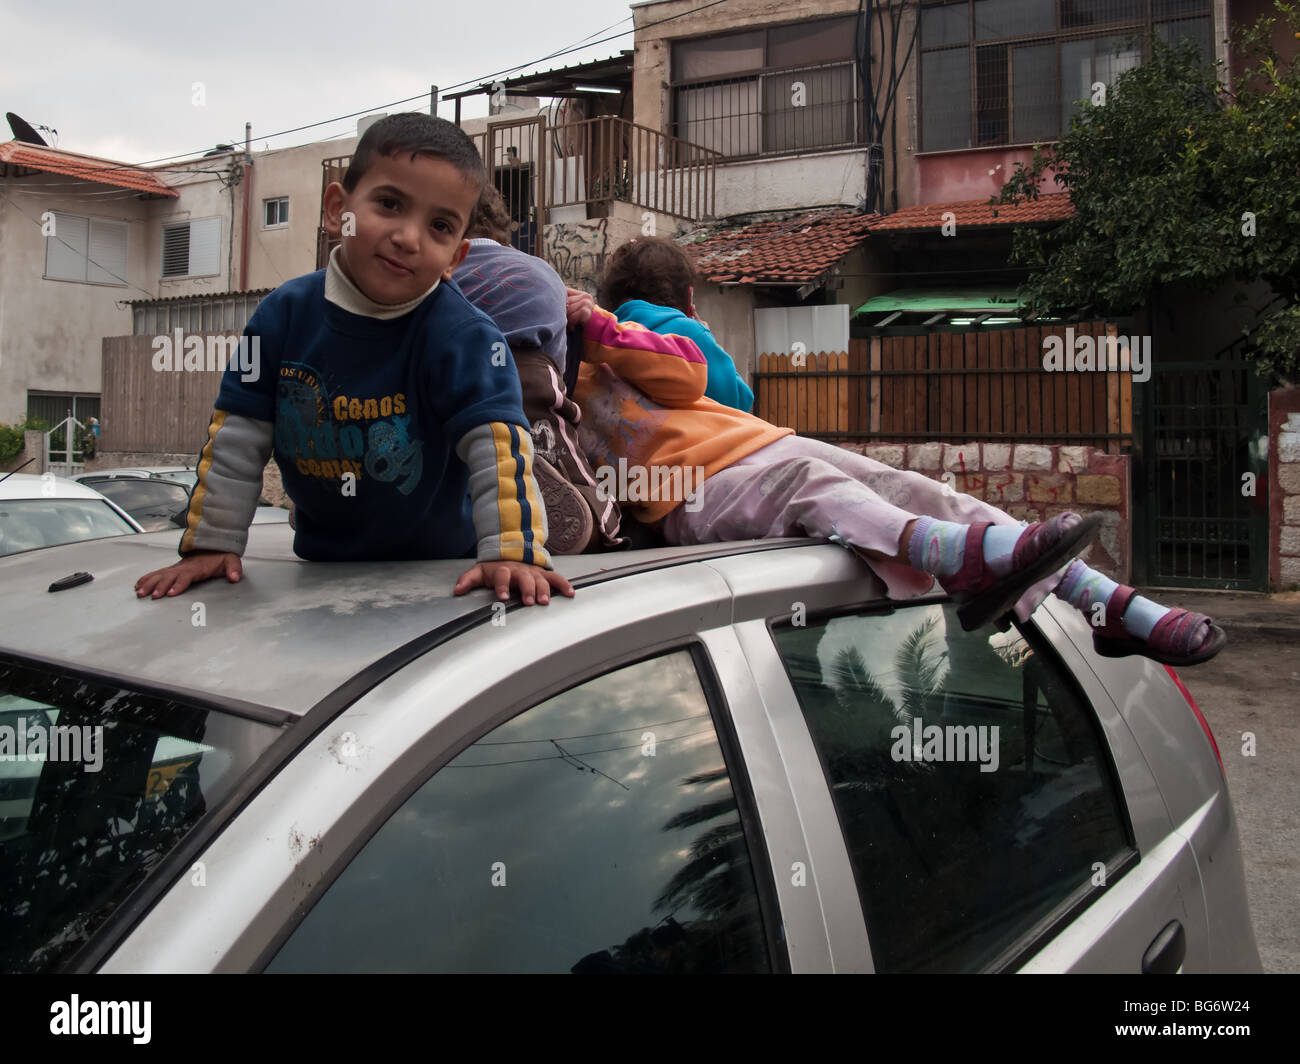 Palestinian Children on a Car Roof in Sheik Jarach East-Jerusalem Stock Photo